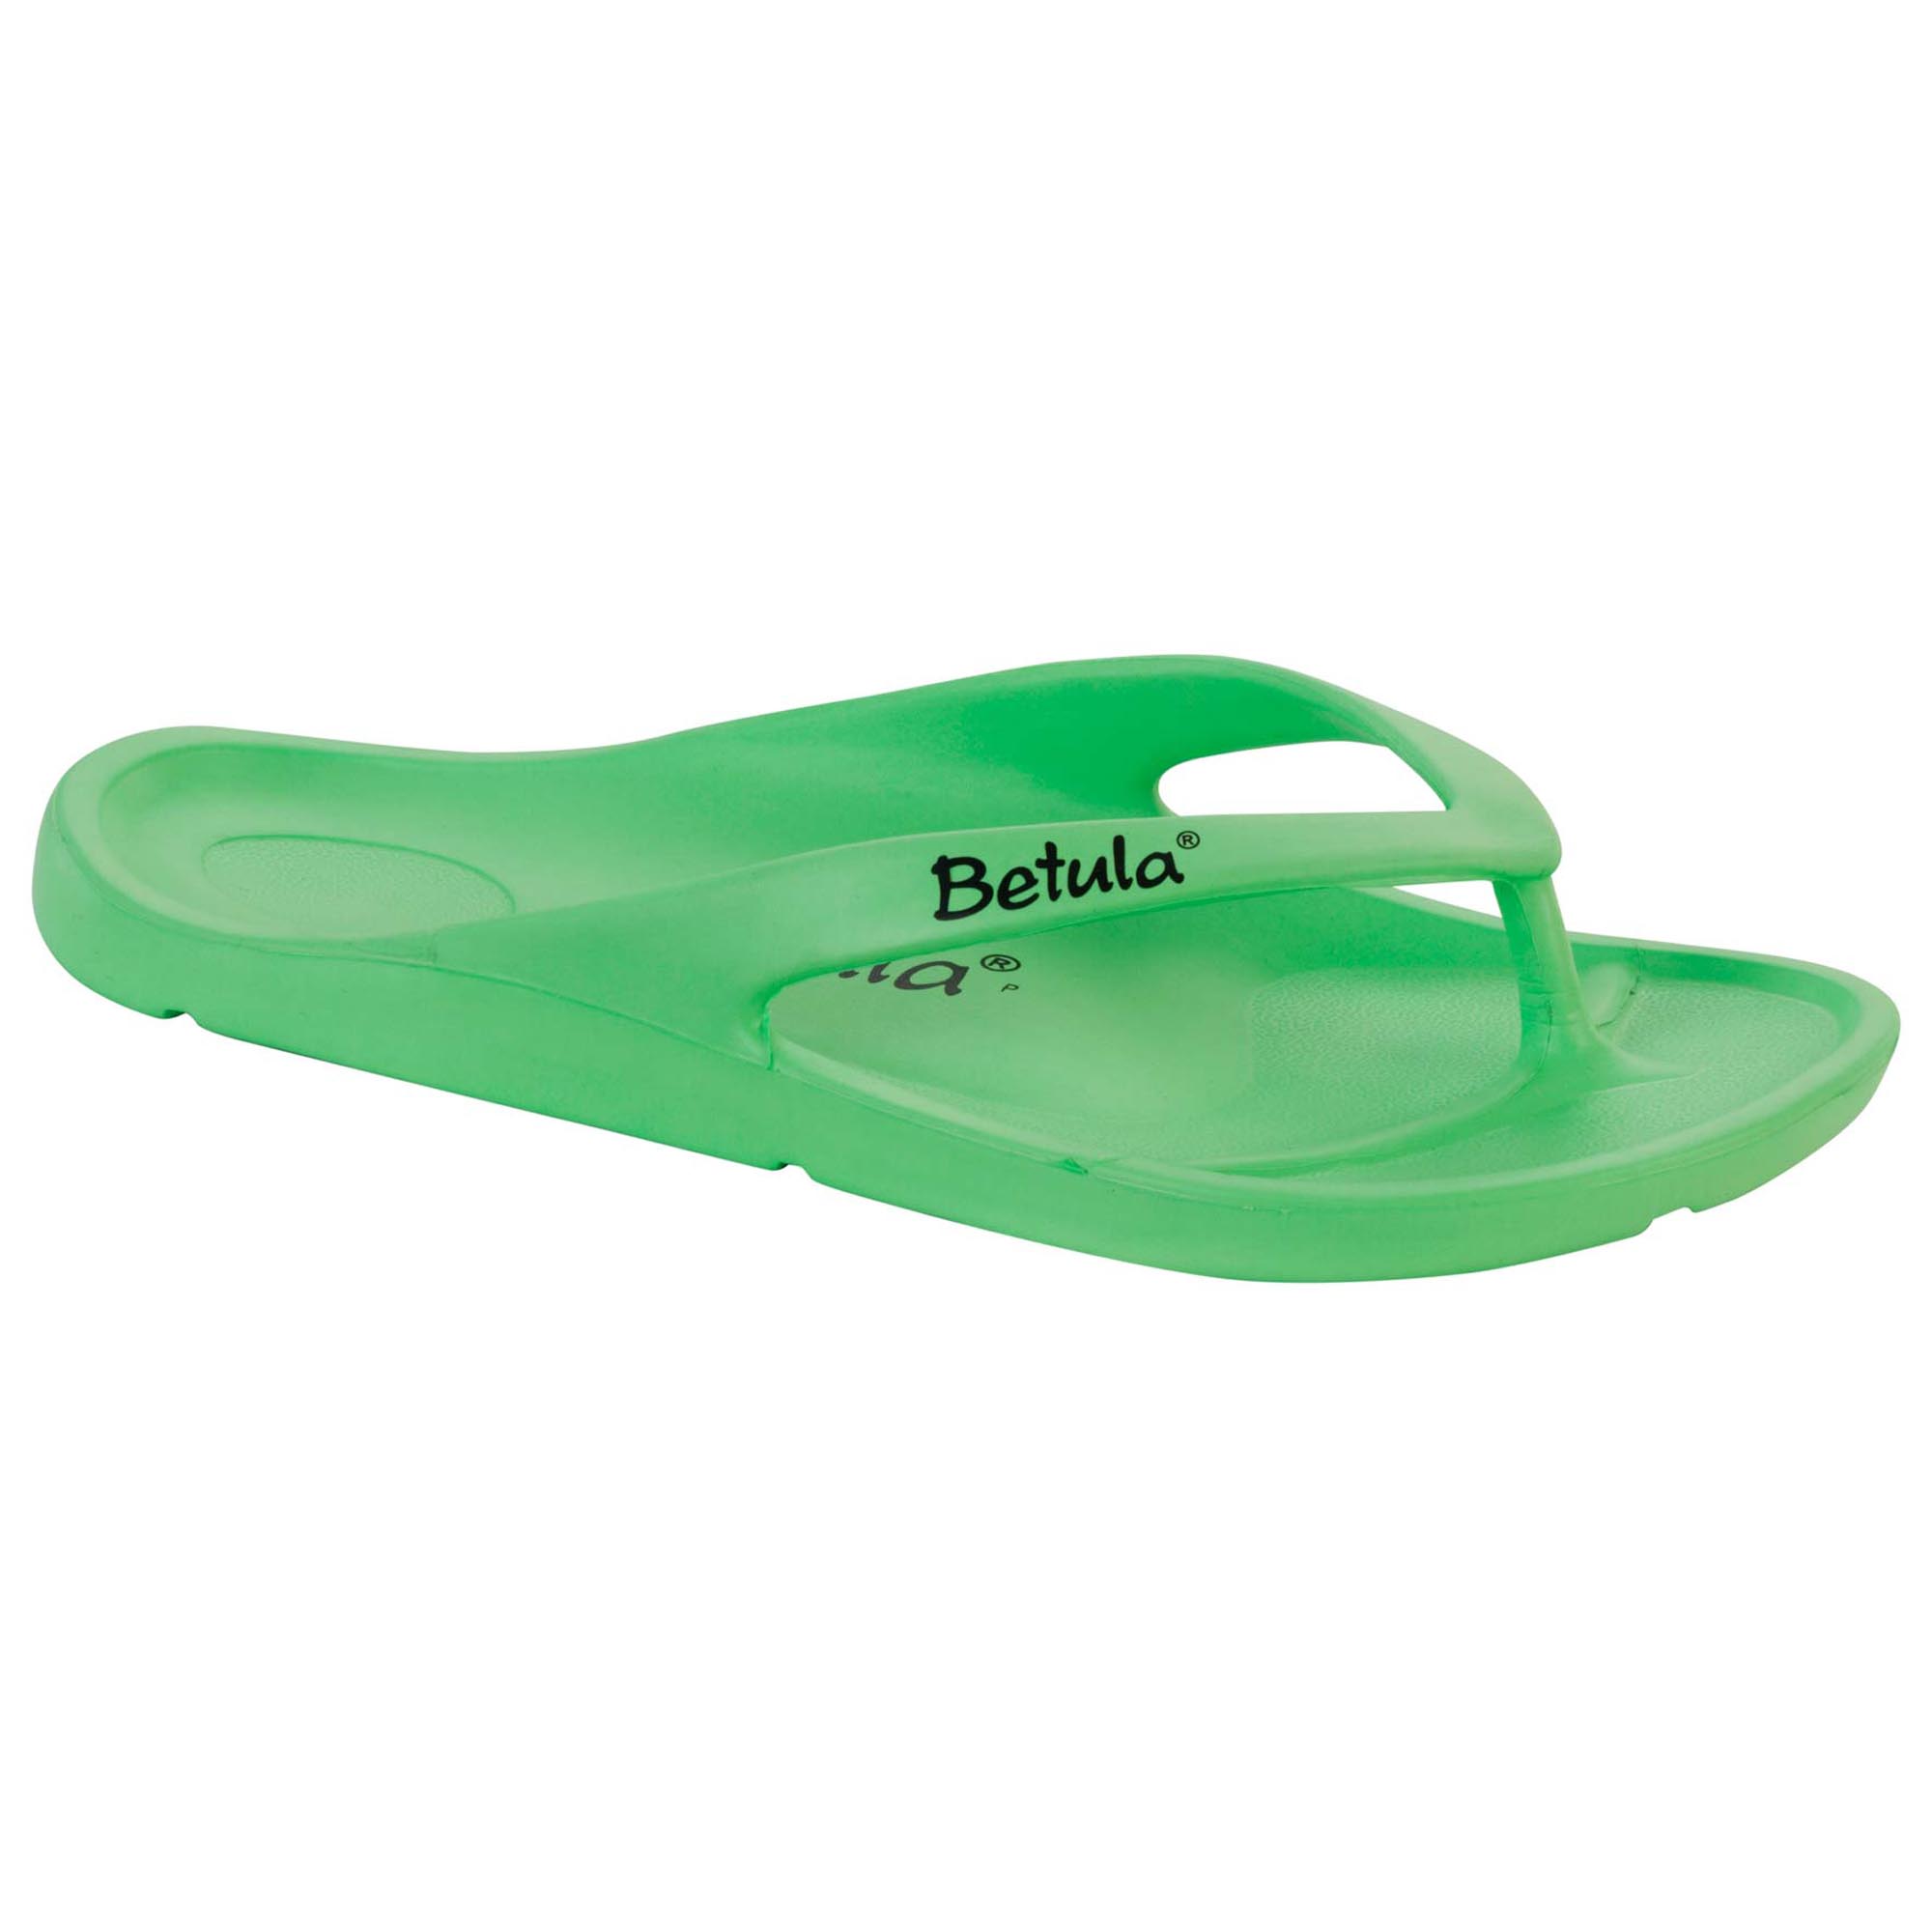 birkenstock betula flip flops